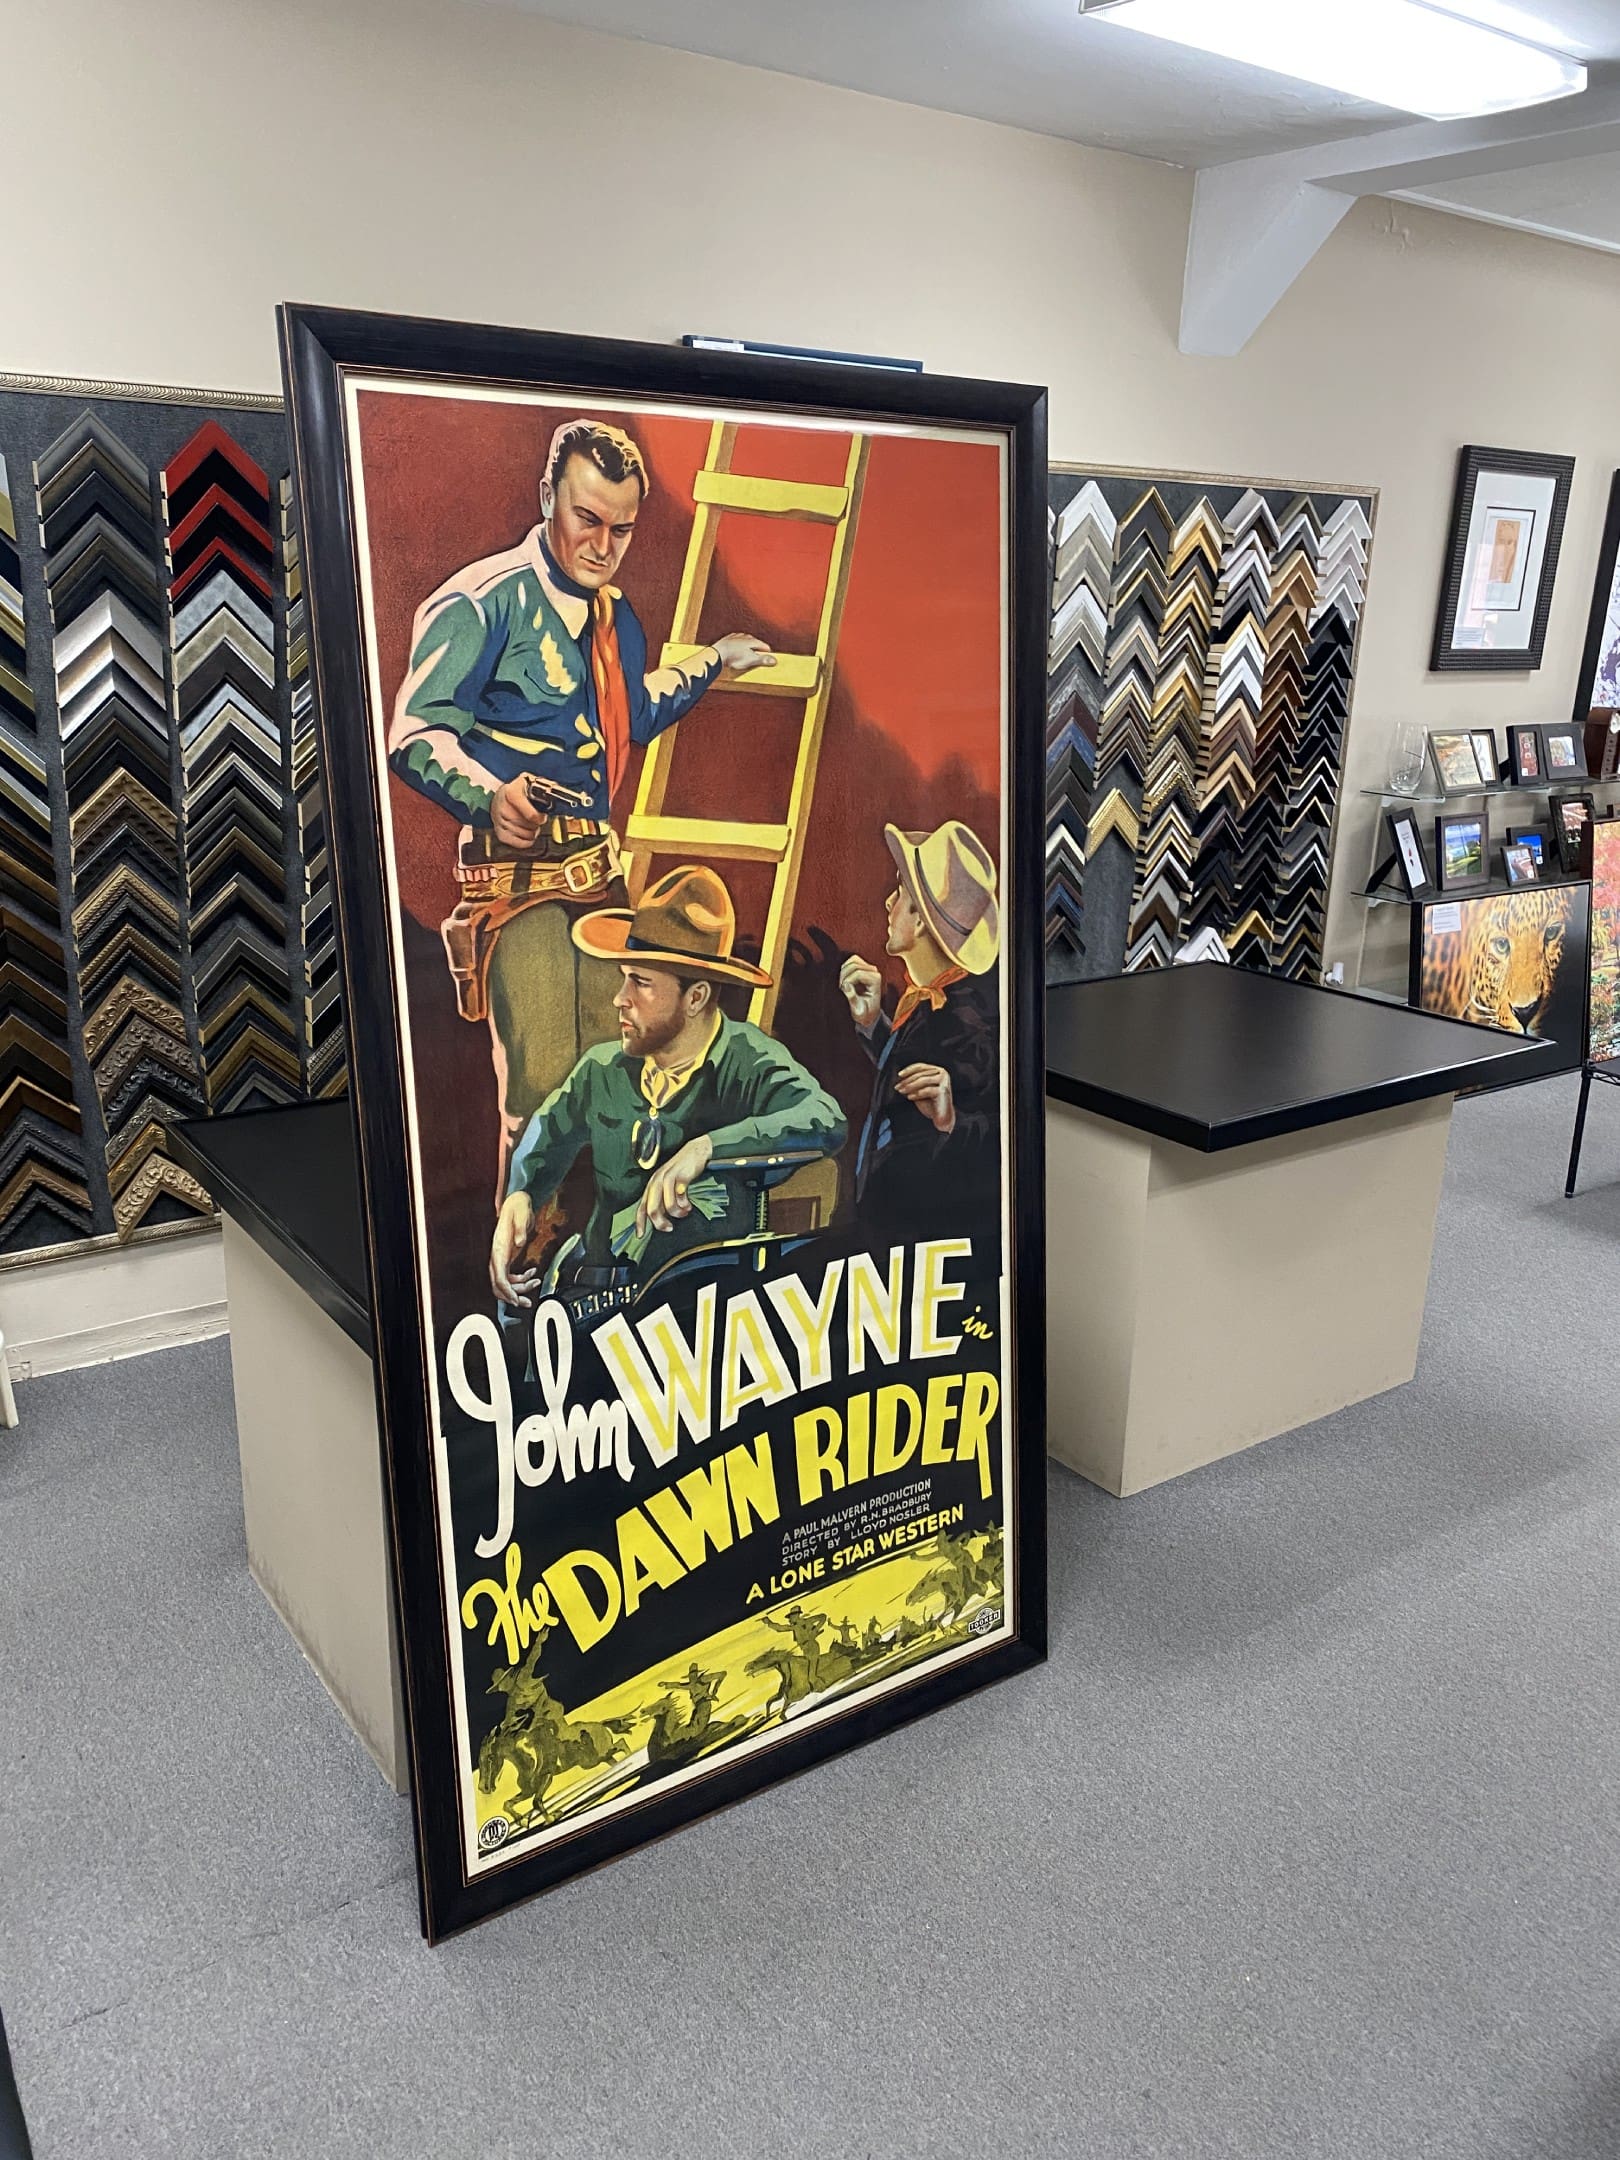 A large framed movie poster of john wayne in the dark rider.